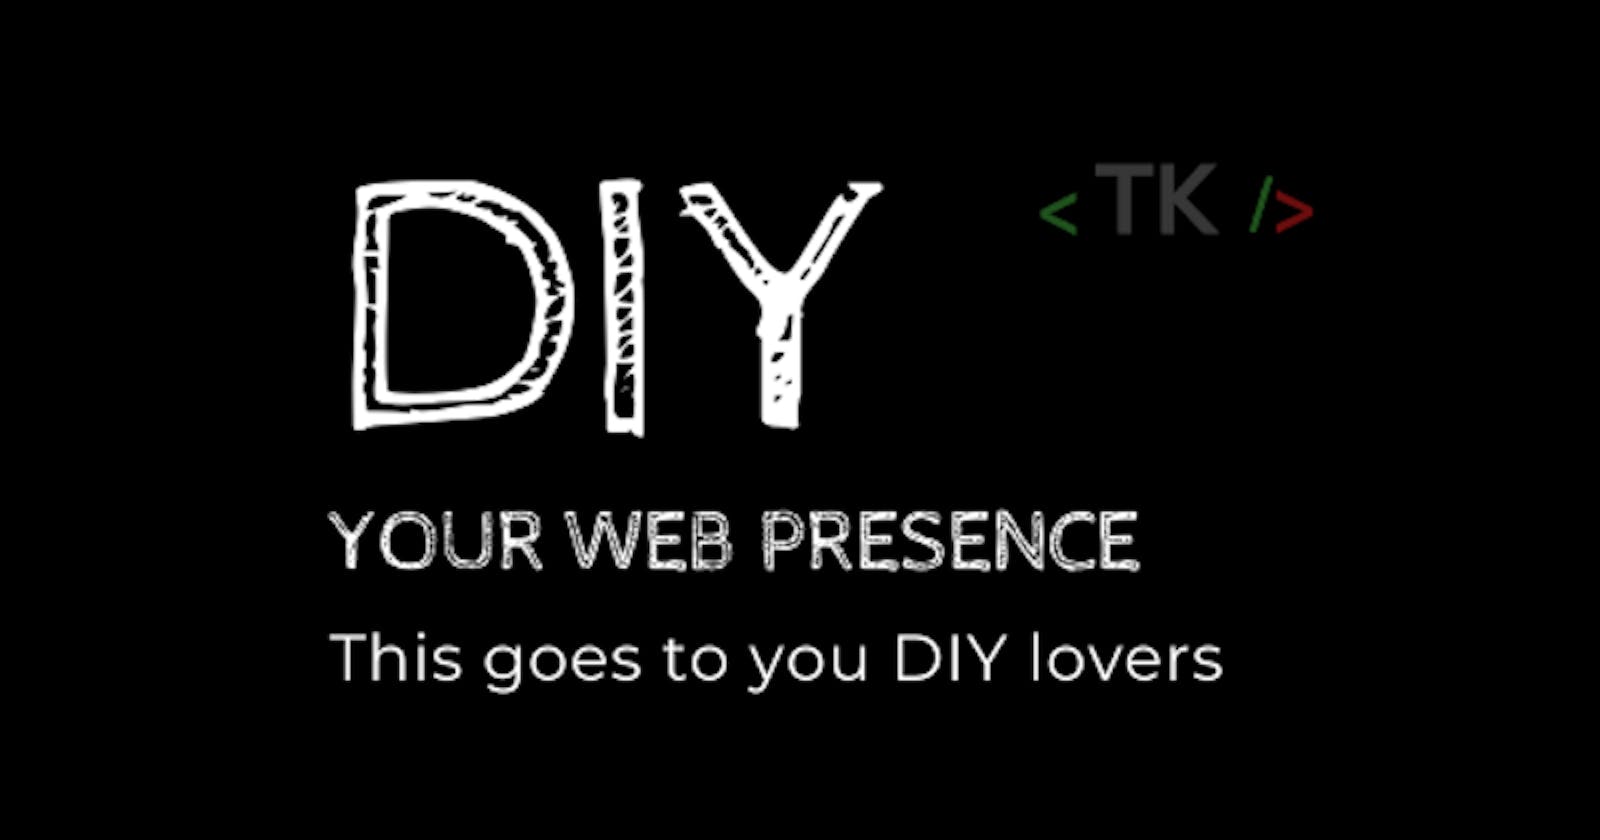 3. #DIY your web presence | Free domain & landing page